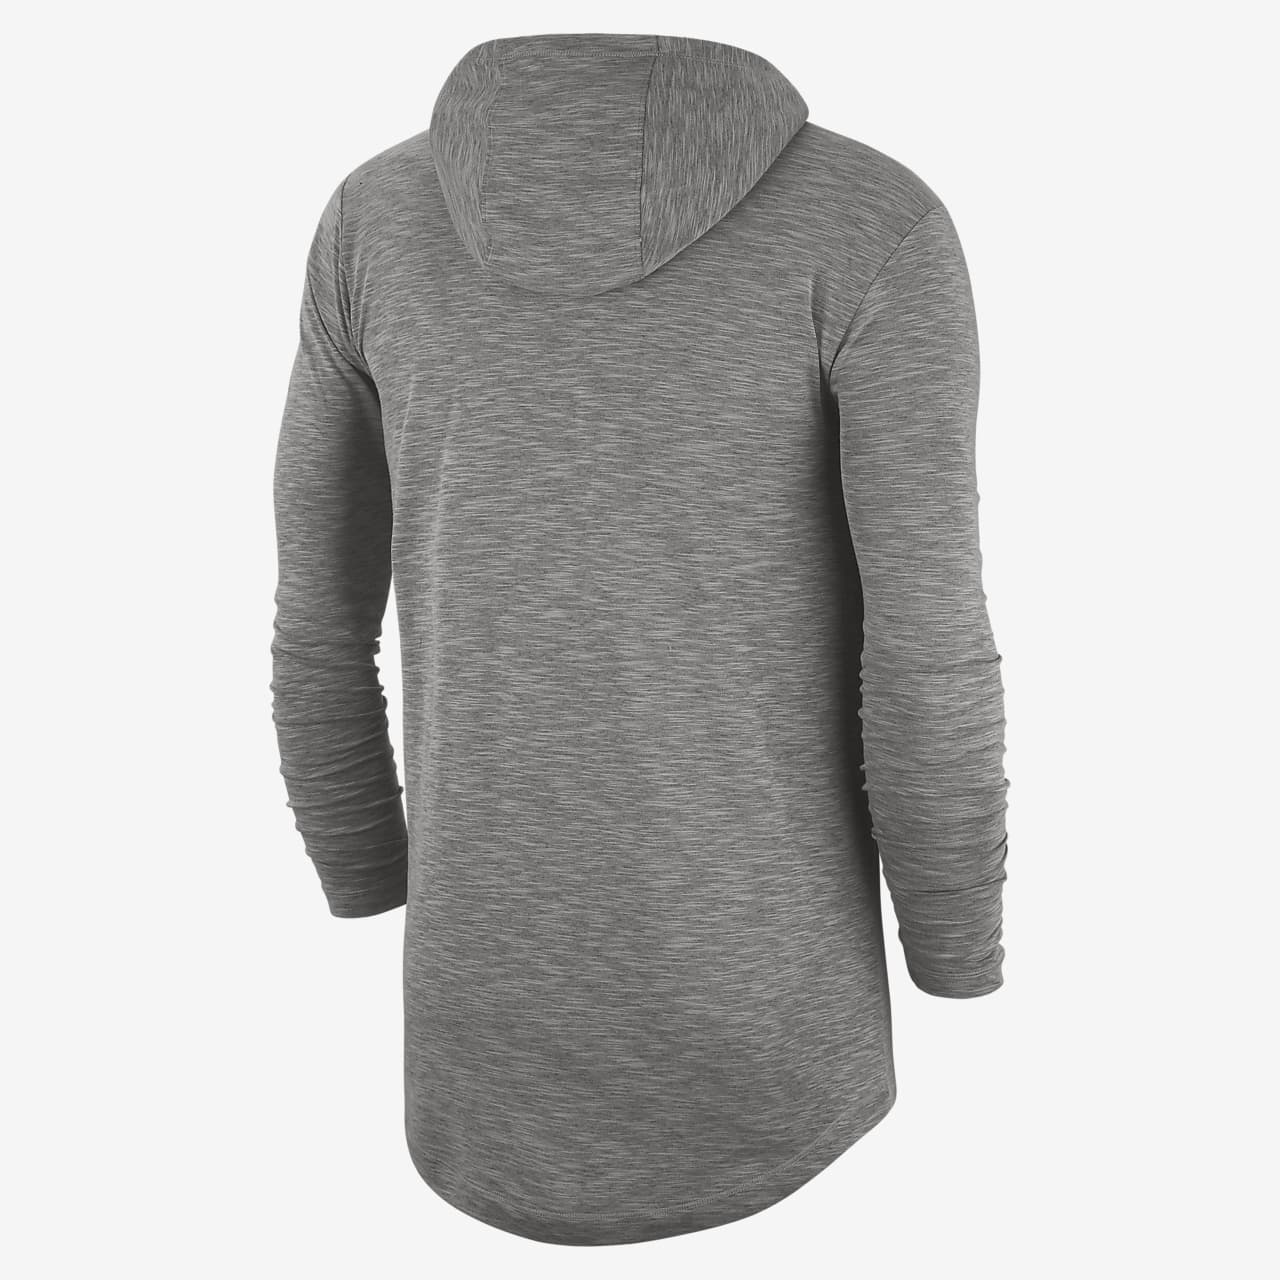 Nike College (Alabama) Men's Long-Sleeve Hooded T-Shirt, 51% OFF